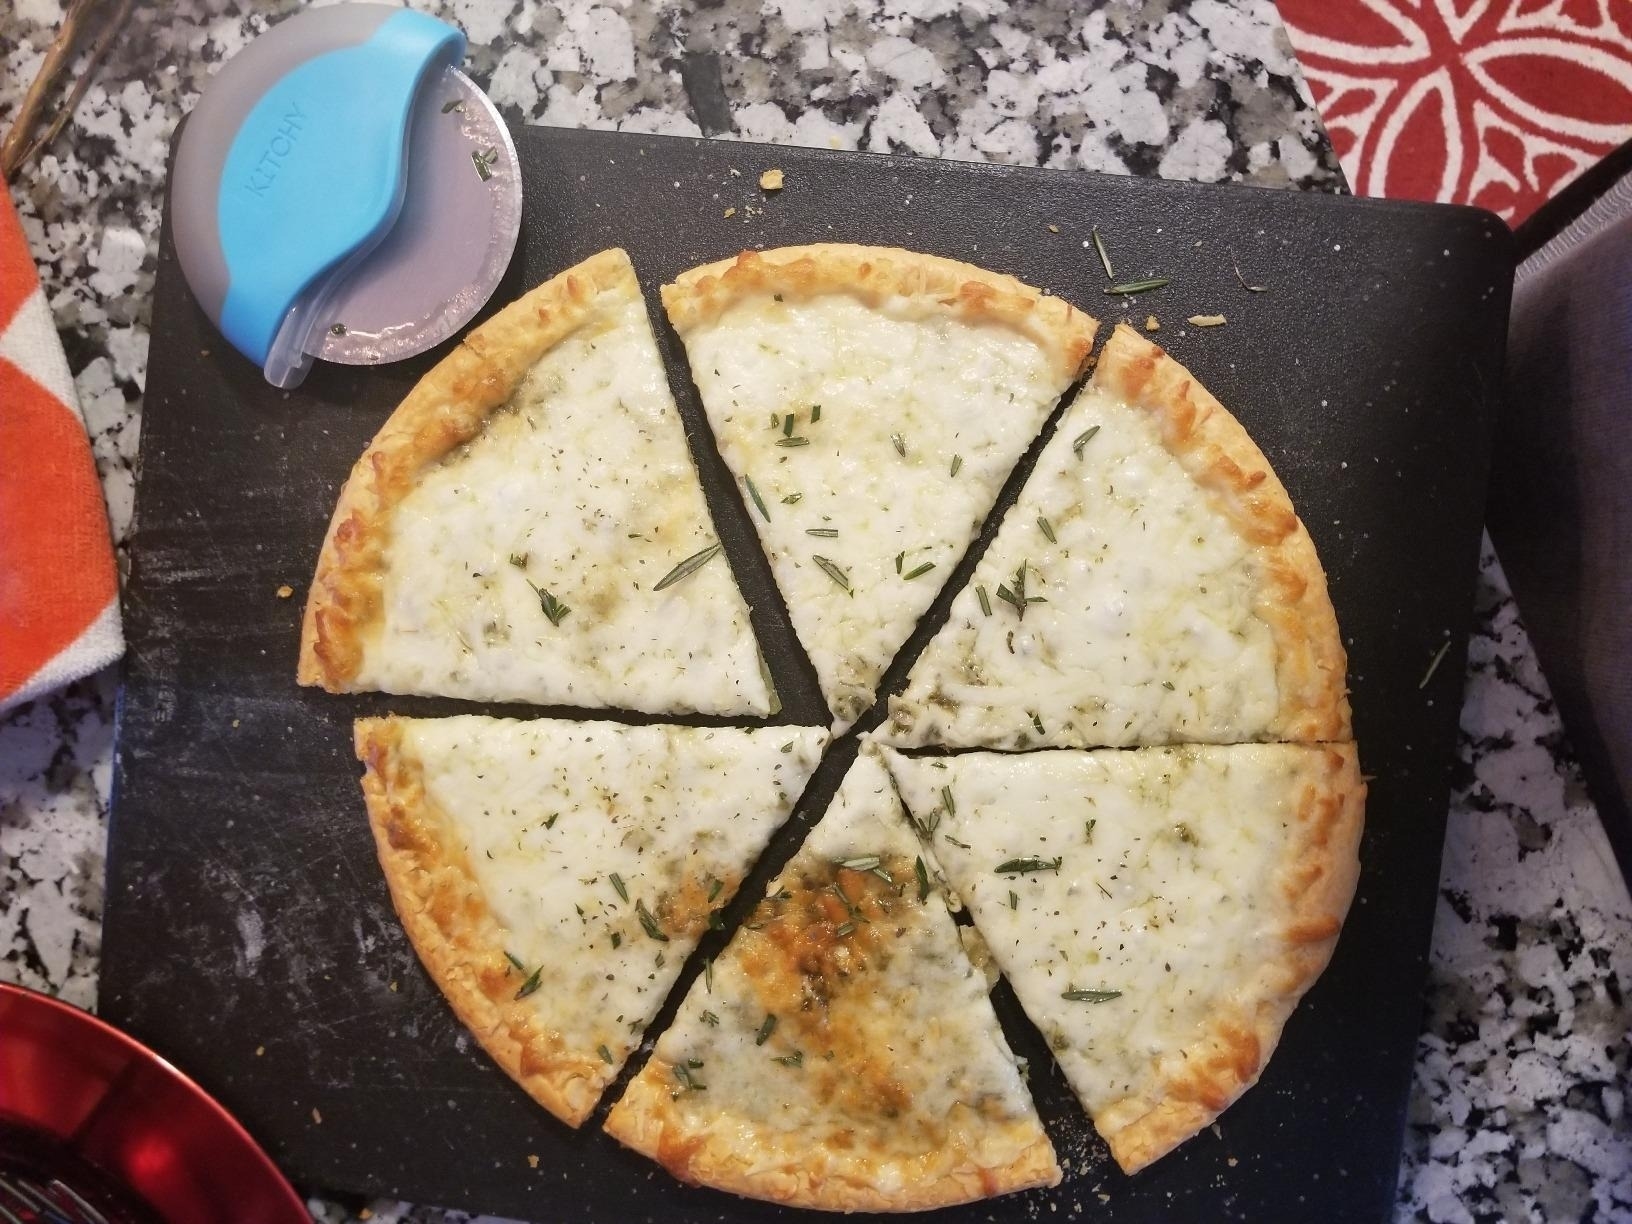 The pizza cutter beside a well-cut pizza